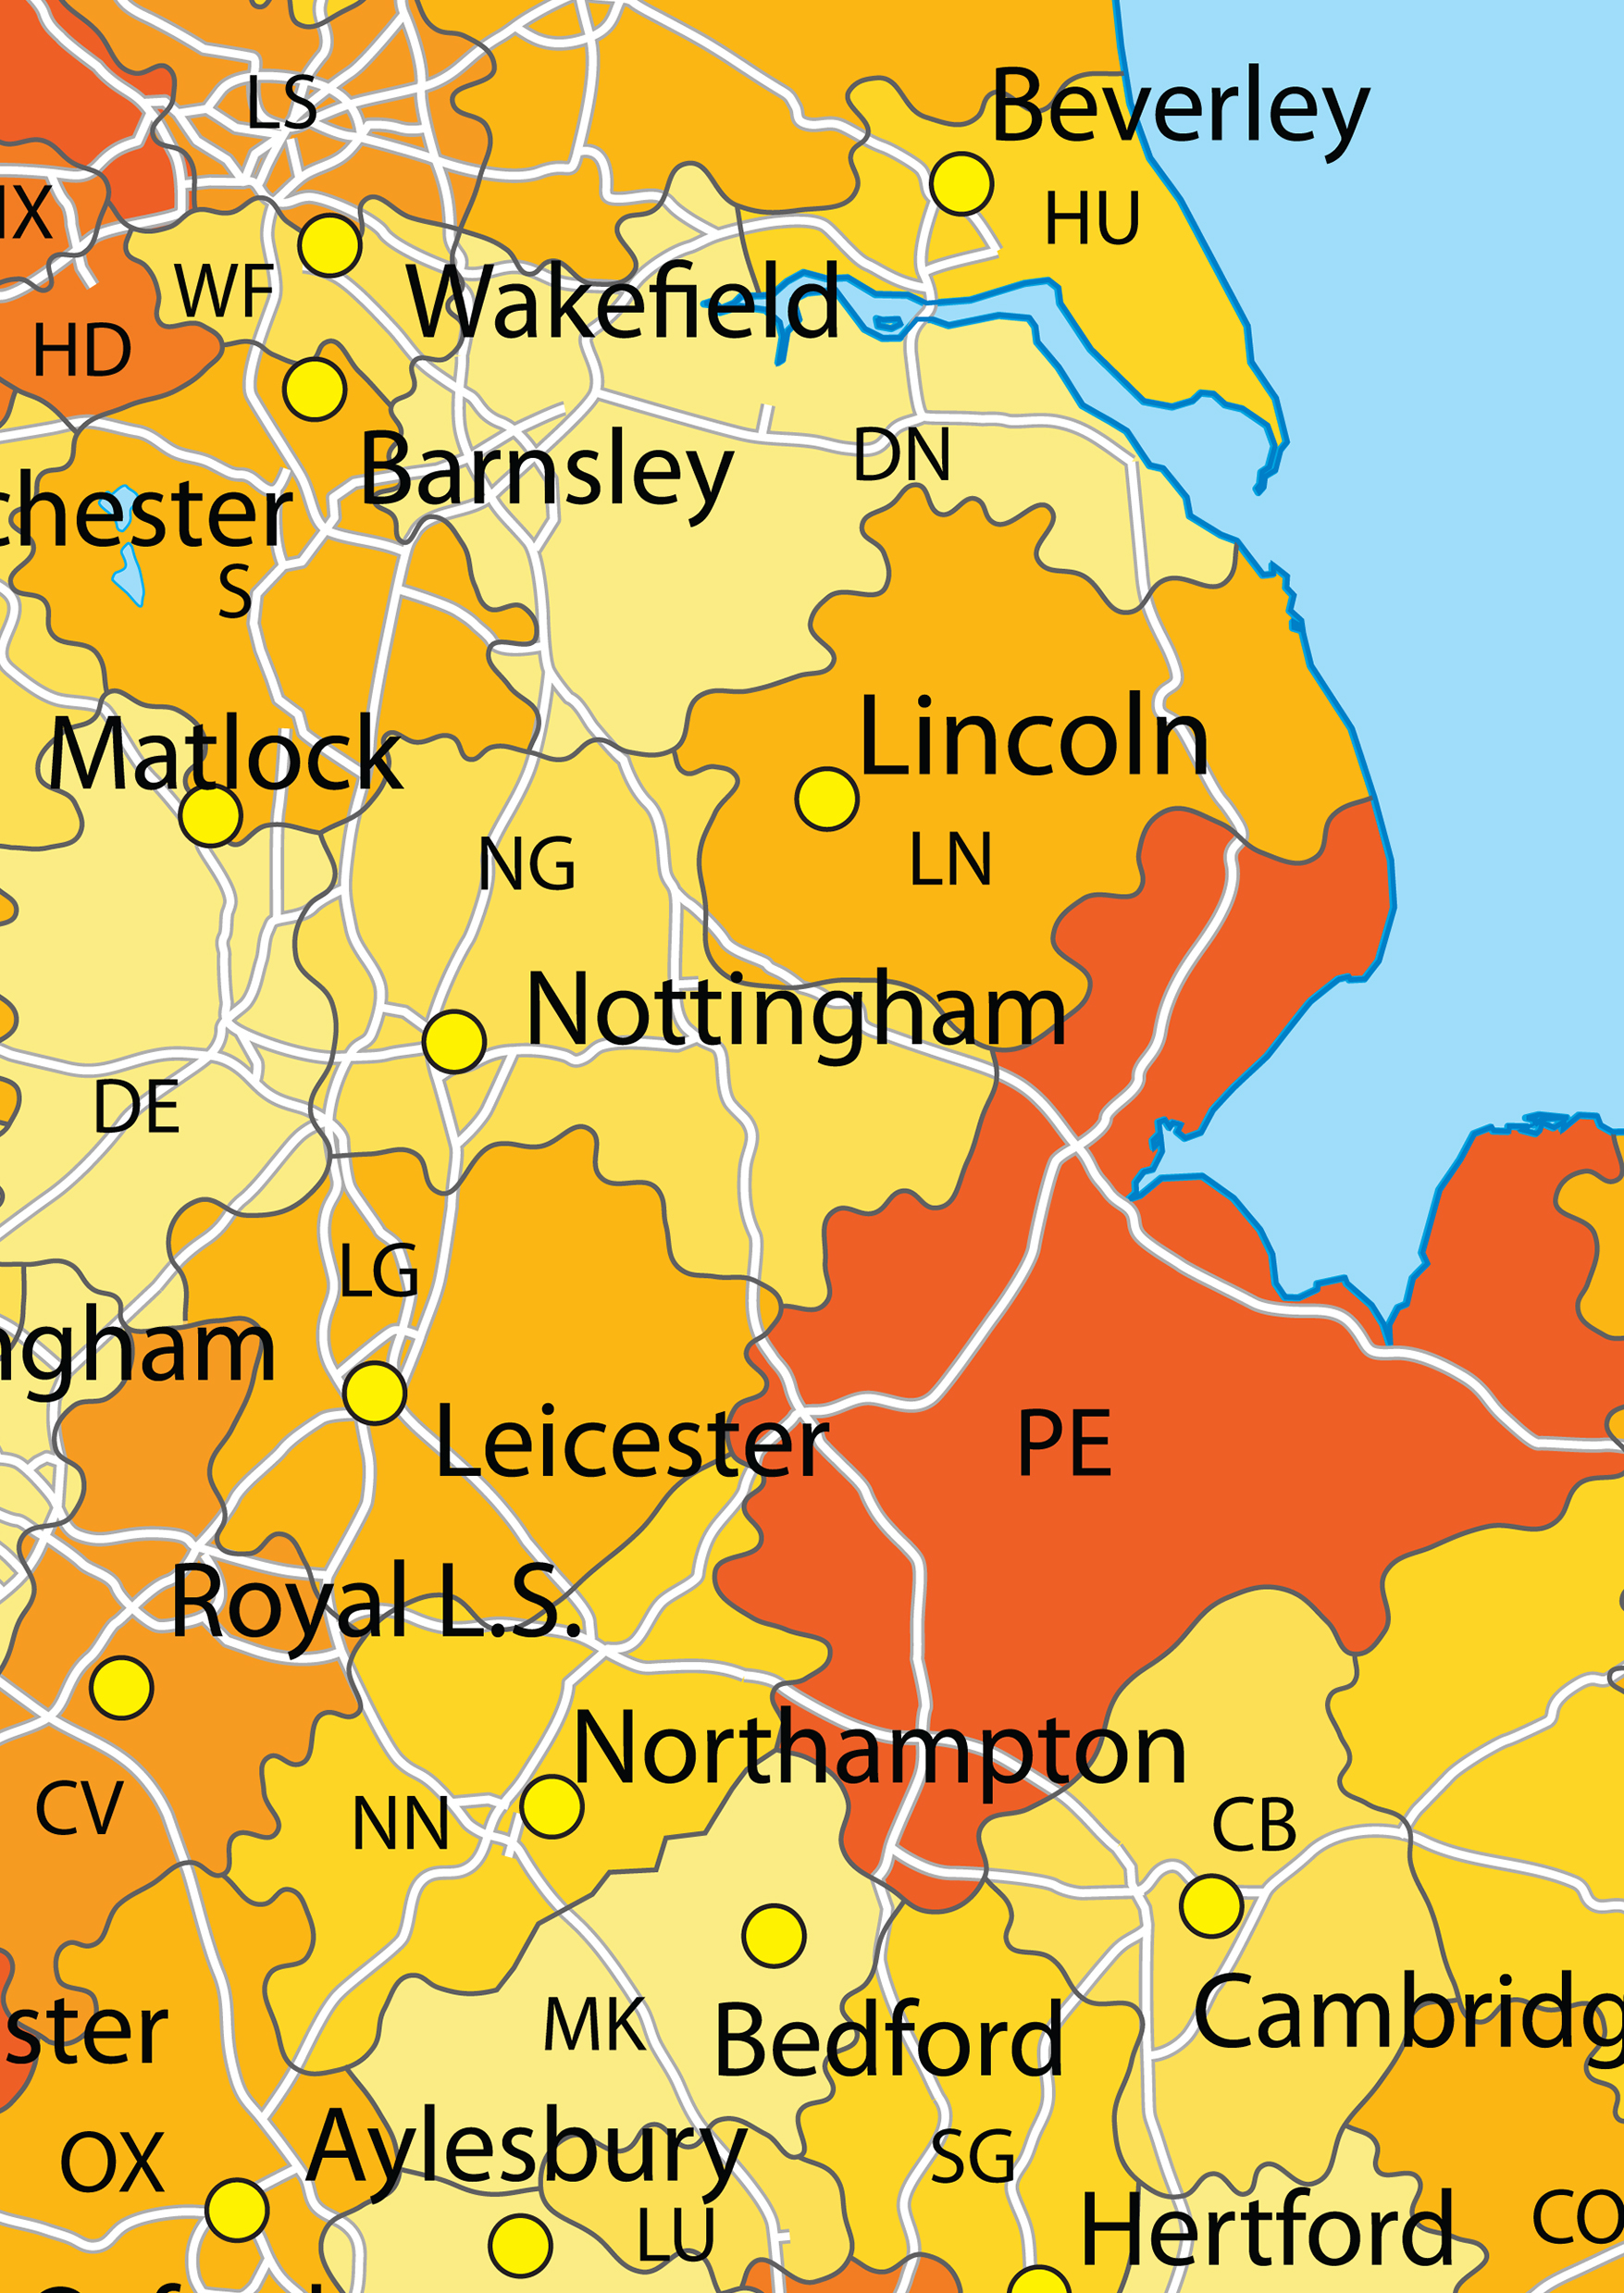 Digital ZIP Code Map United Kingdom 652 | The World of Maps.com